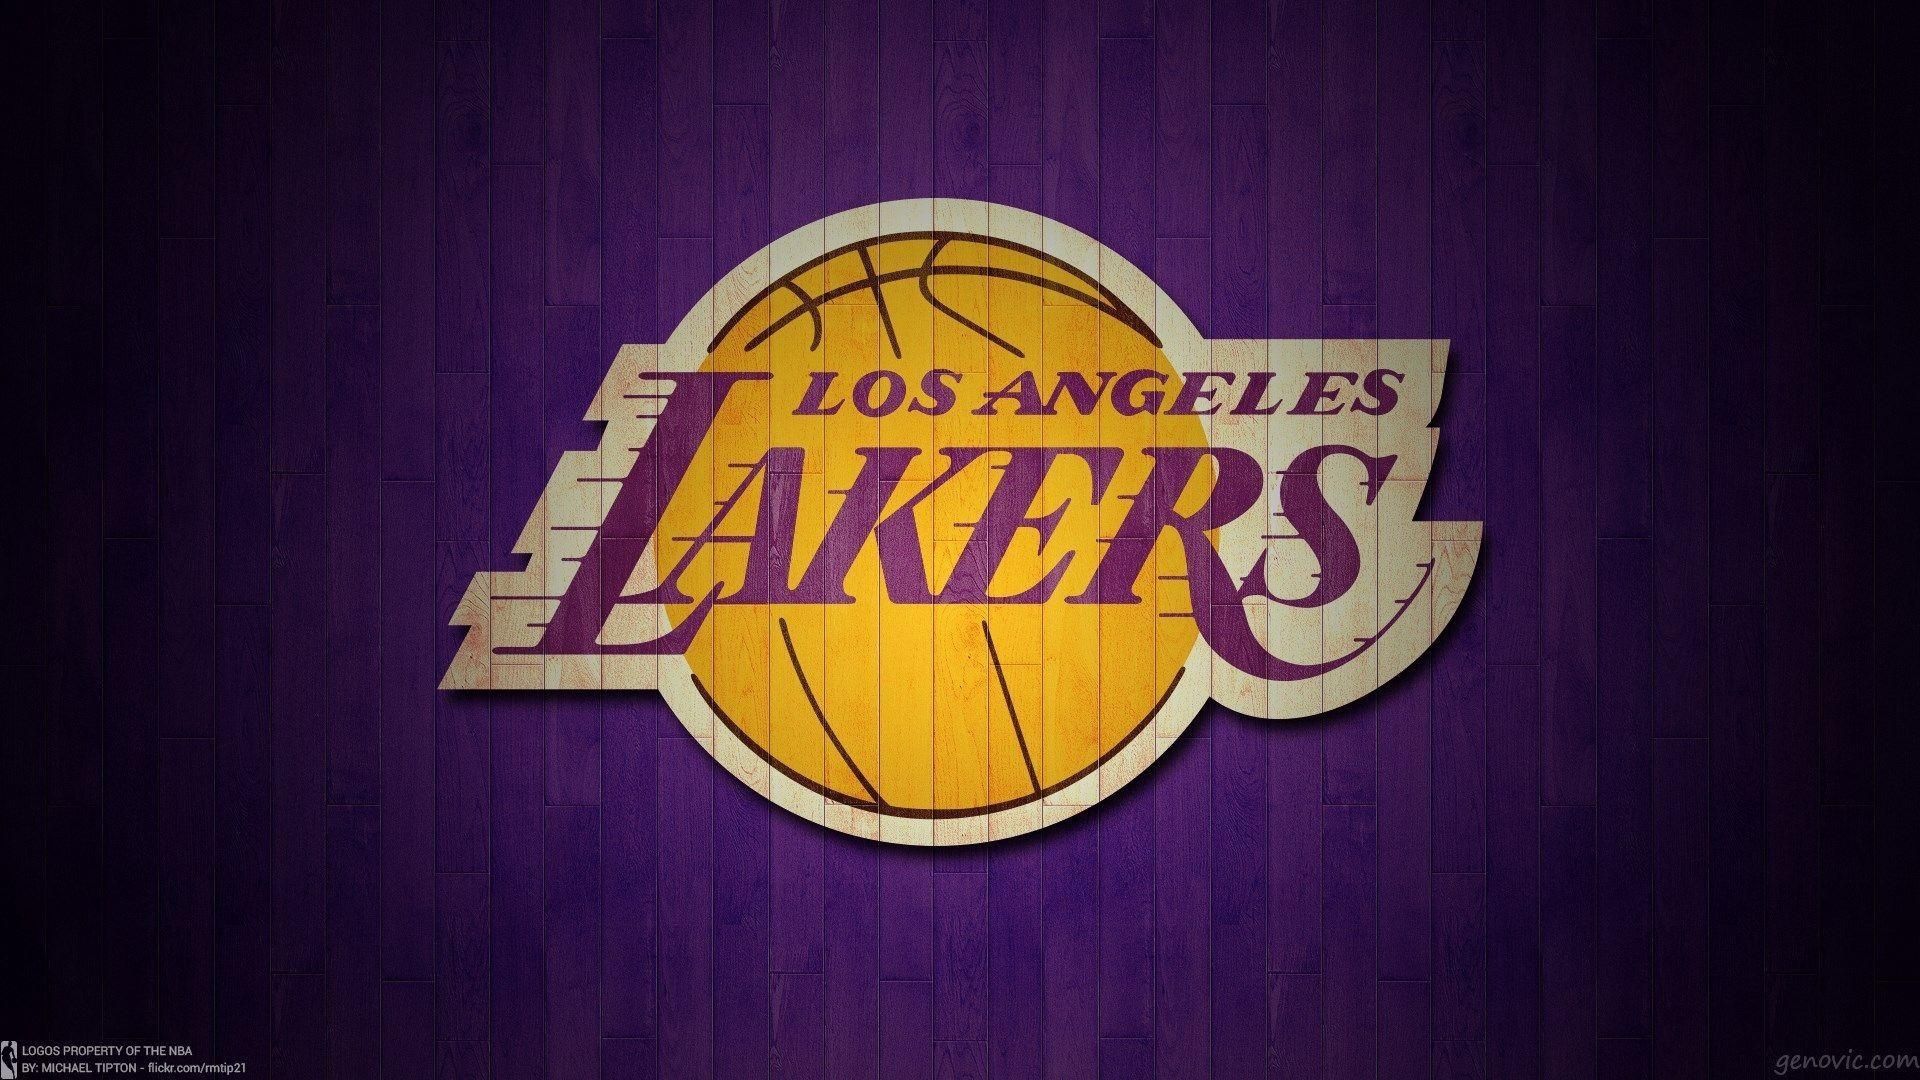 Latest Los Angeles Lakers Wallpaper HD FULL HD 1080p For PC Background. Lakers wallpaper, Nba wallpaper, Kobe bryant wallpaper